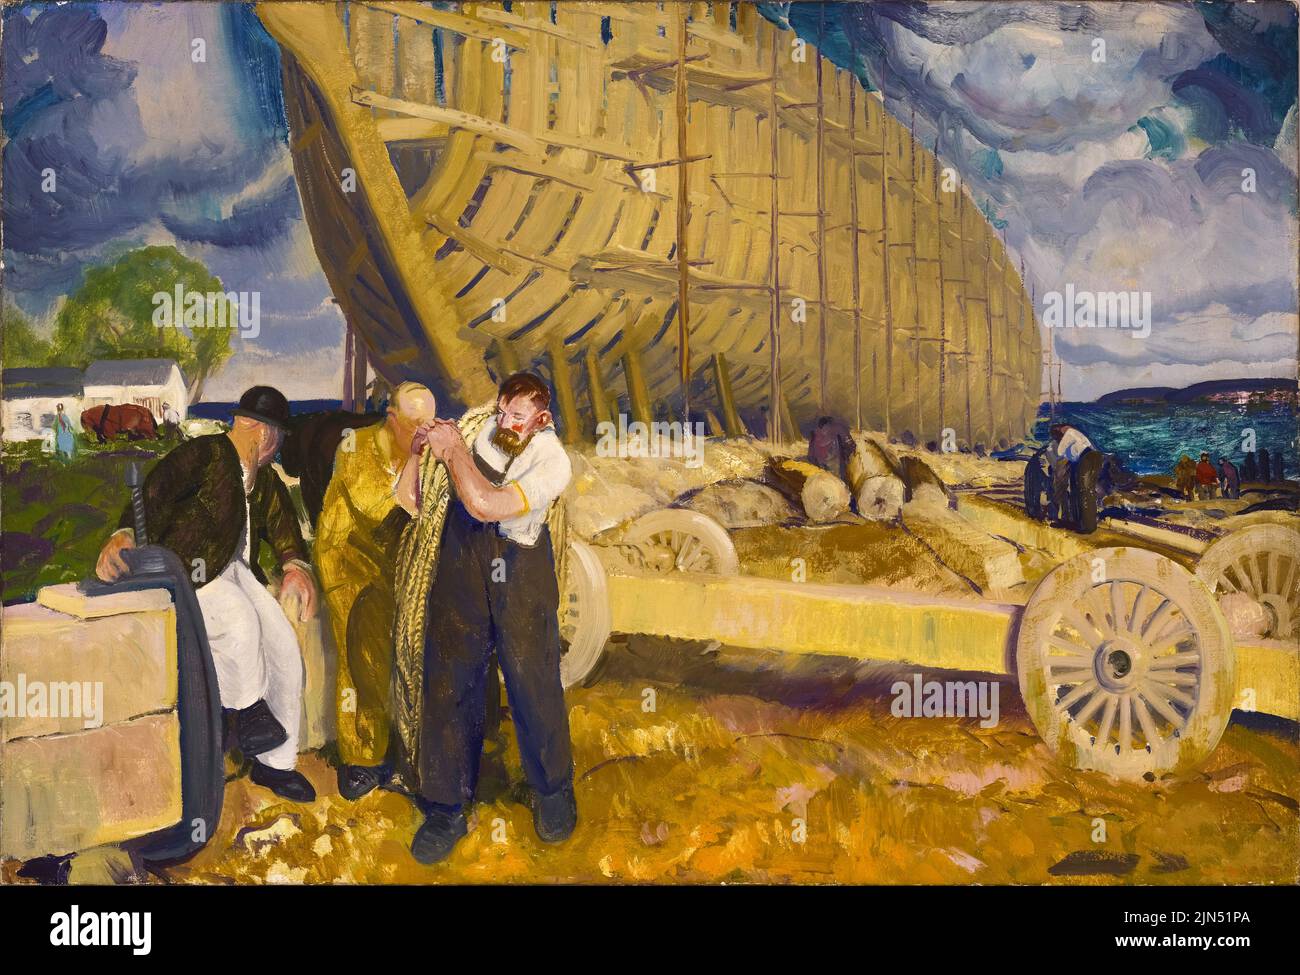 George Bellows, Builders of Ships, Ölgemälde auf Leinwand, 1916 Stockfoto